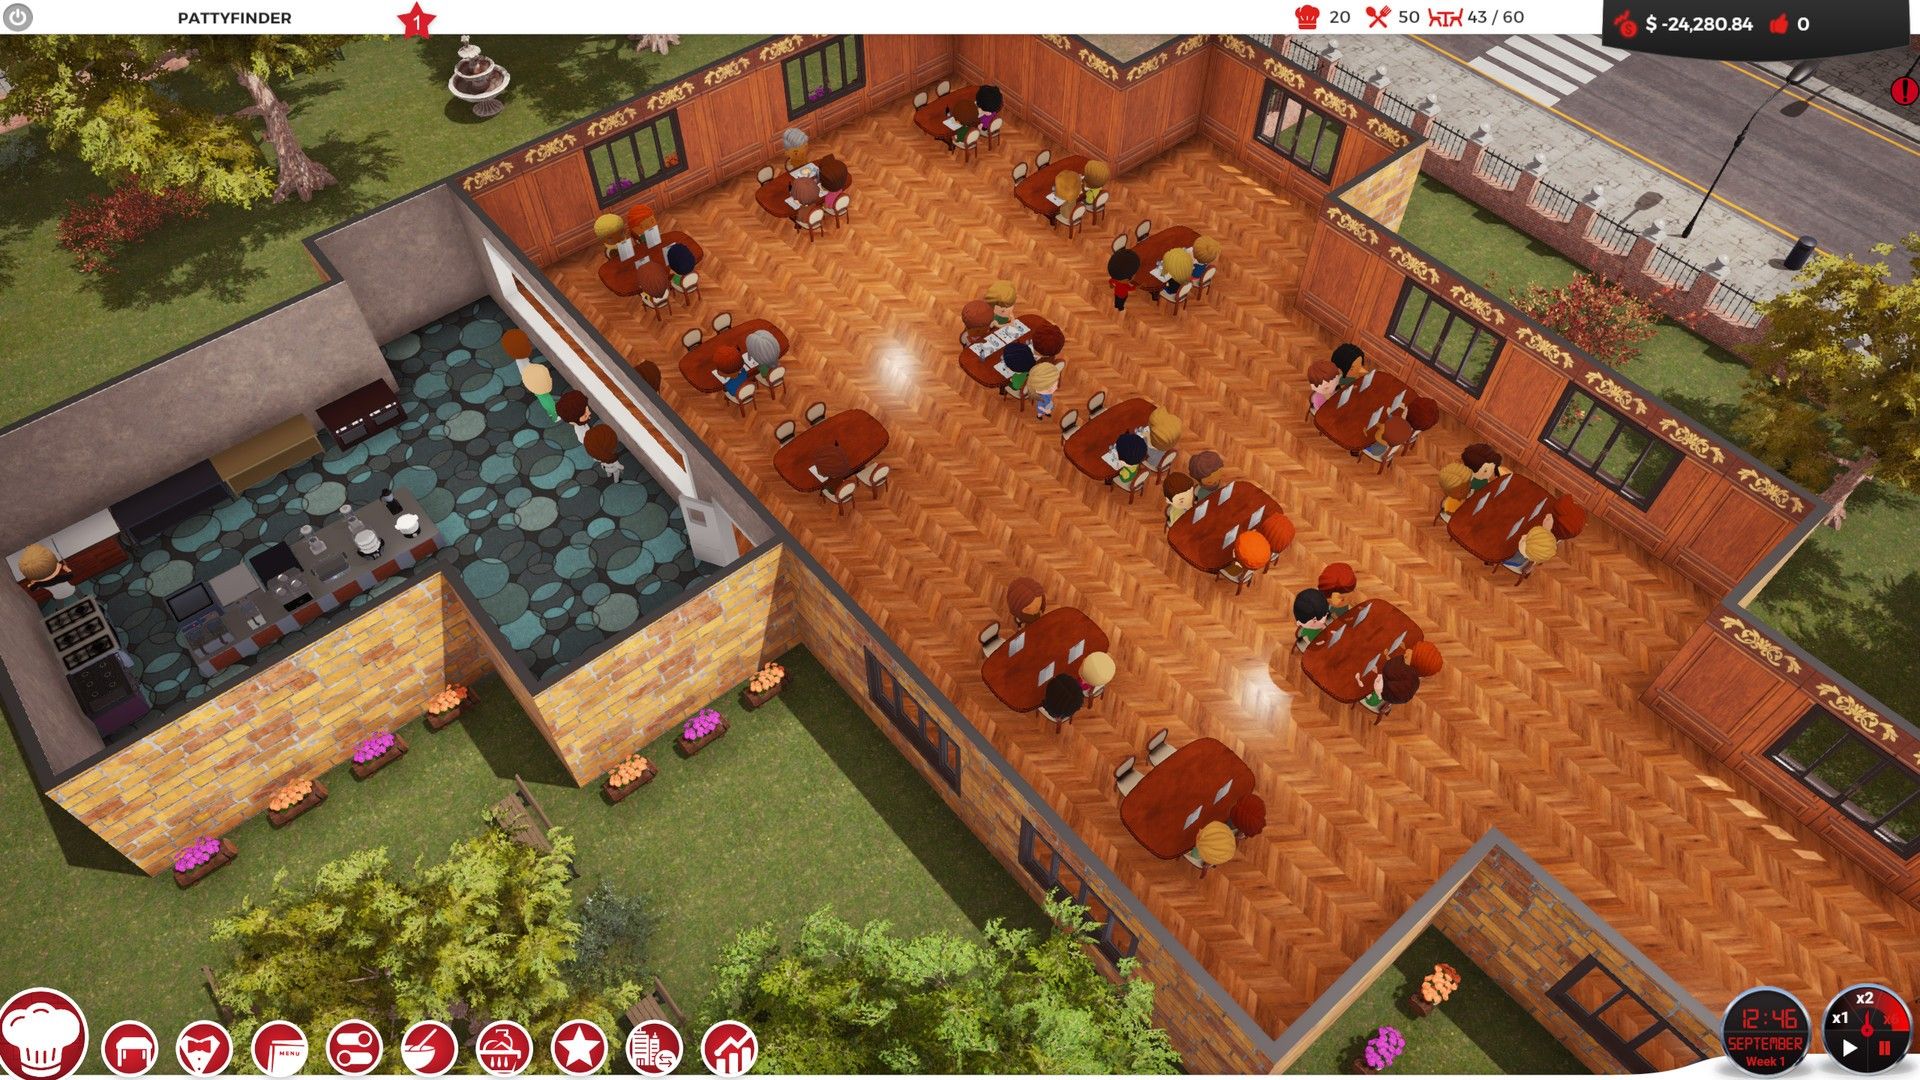 Star Chef: Cooking & Restaurant Game on Steam